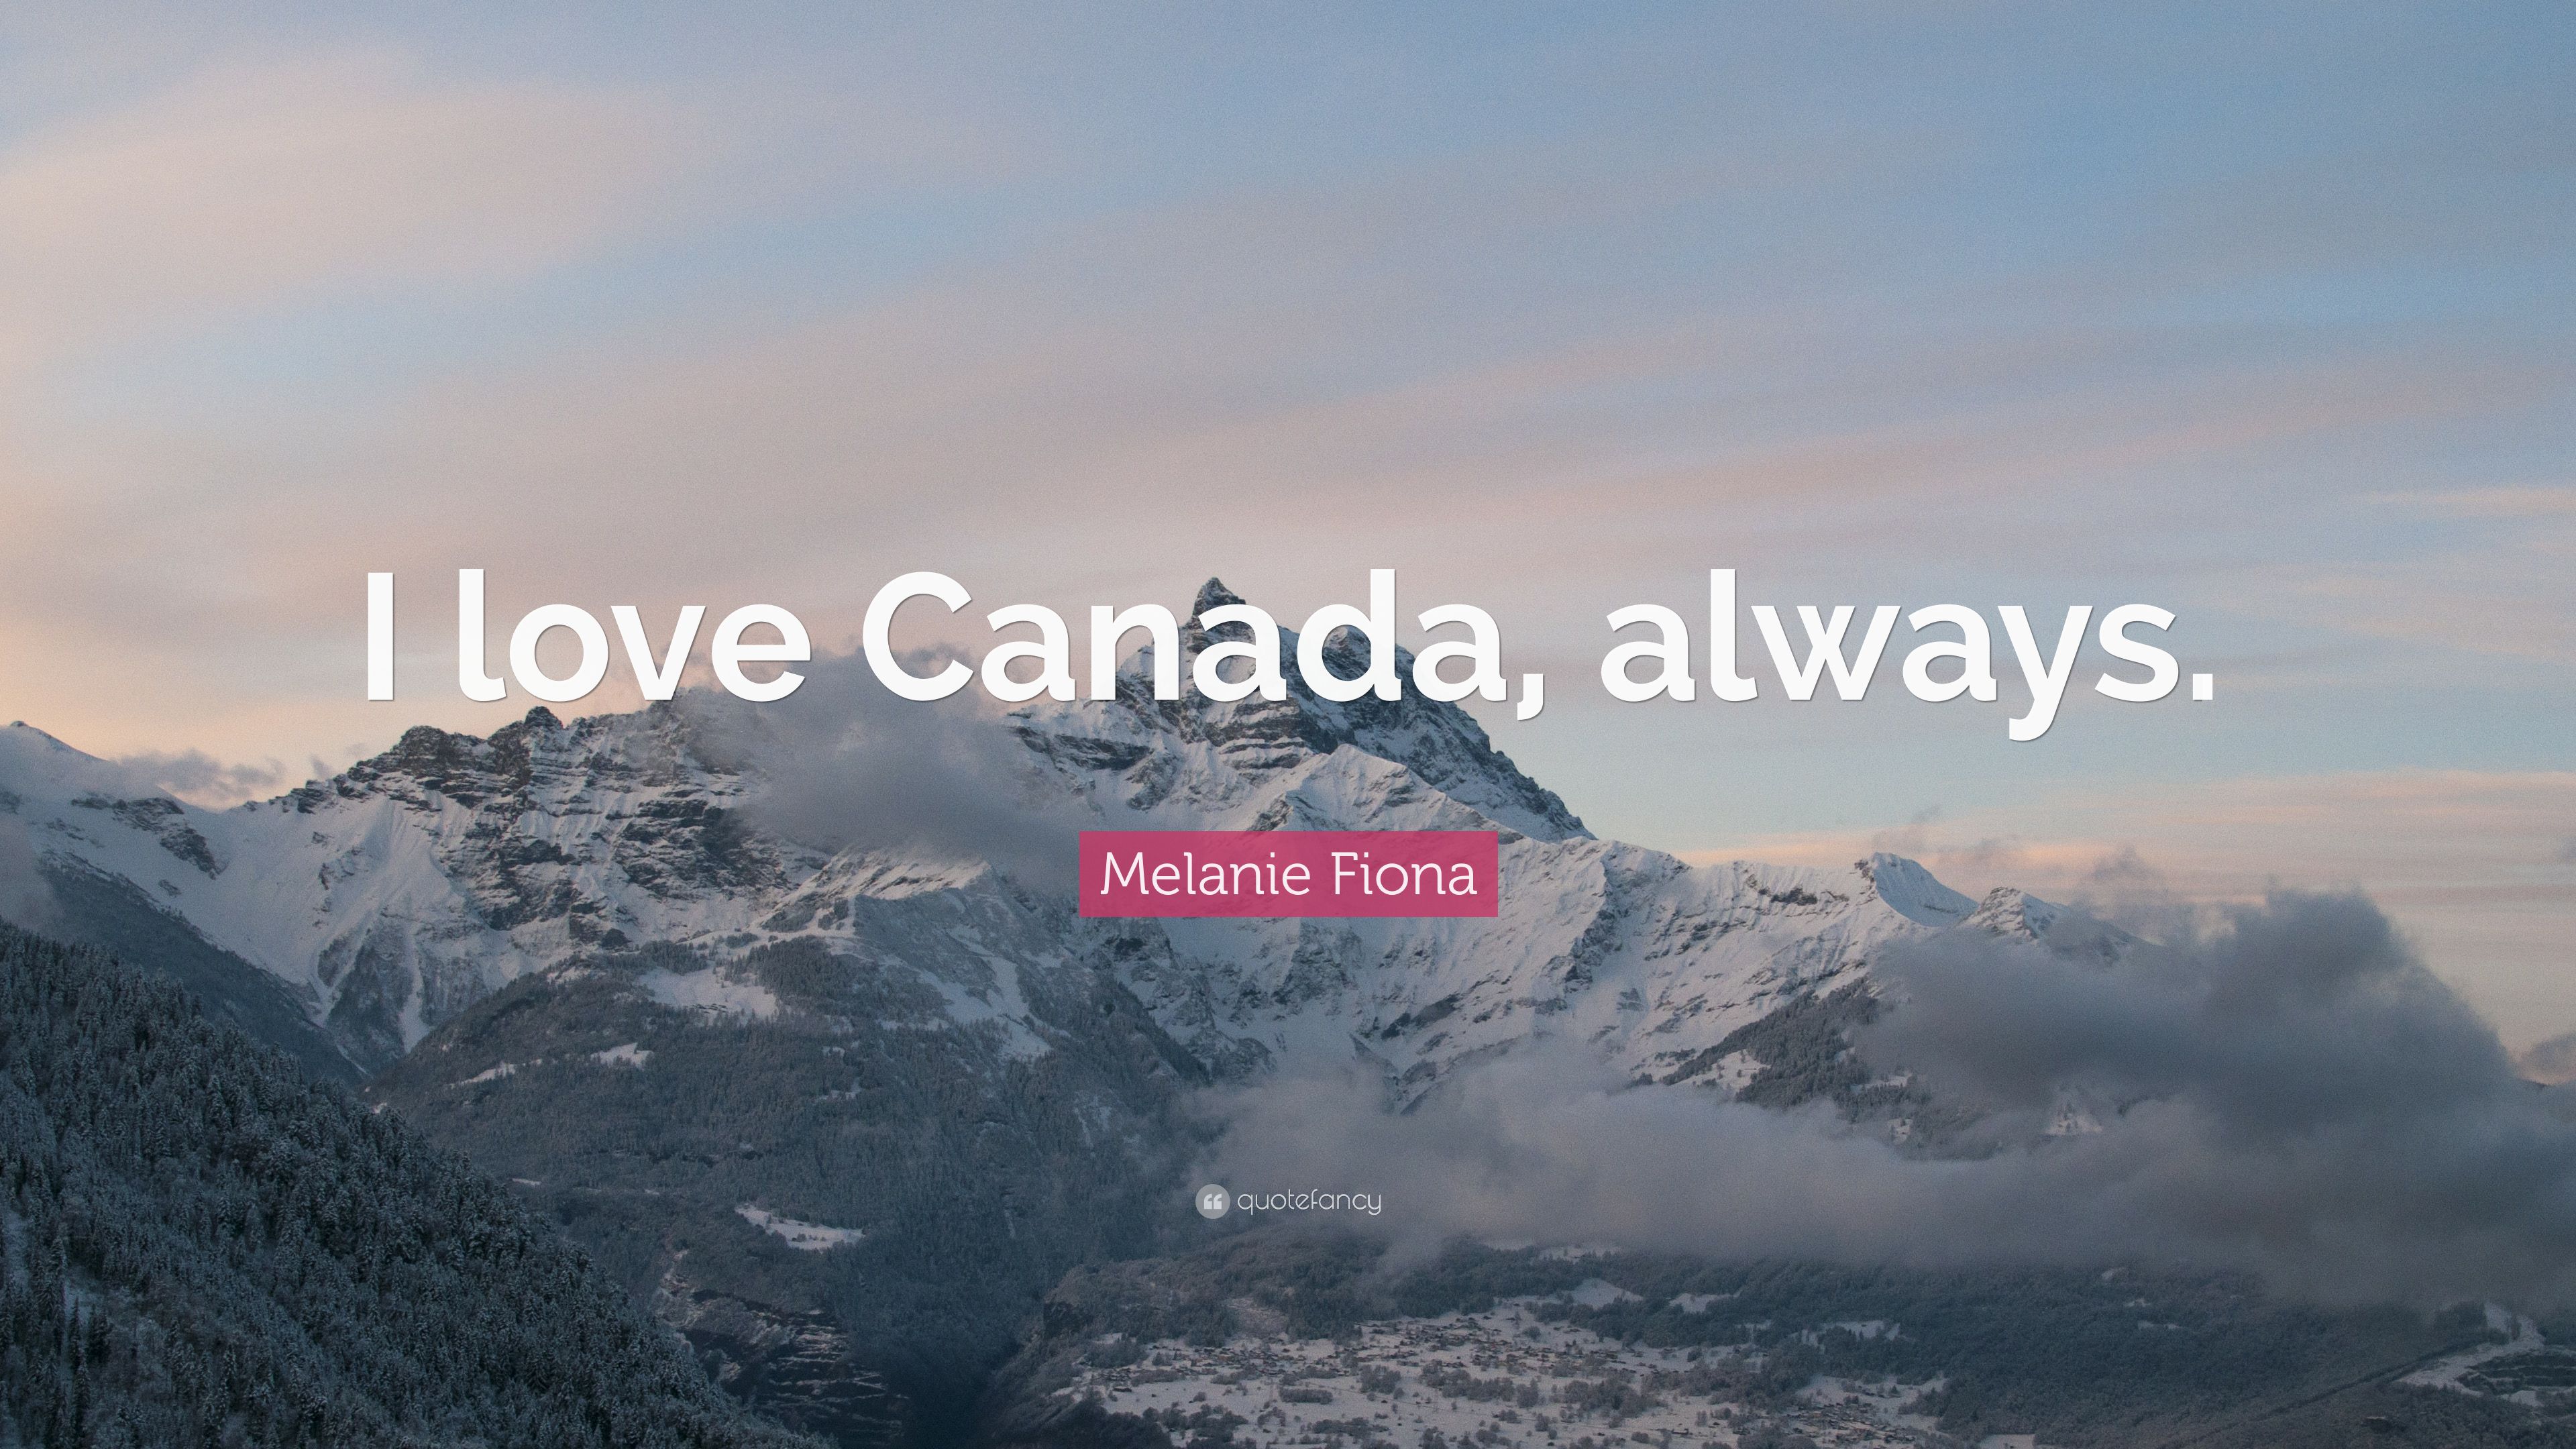 Melanie Fiona Quote: “I love Canada, always.” (7 wallpaper)